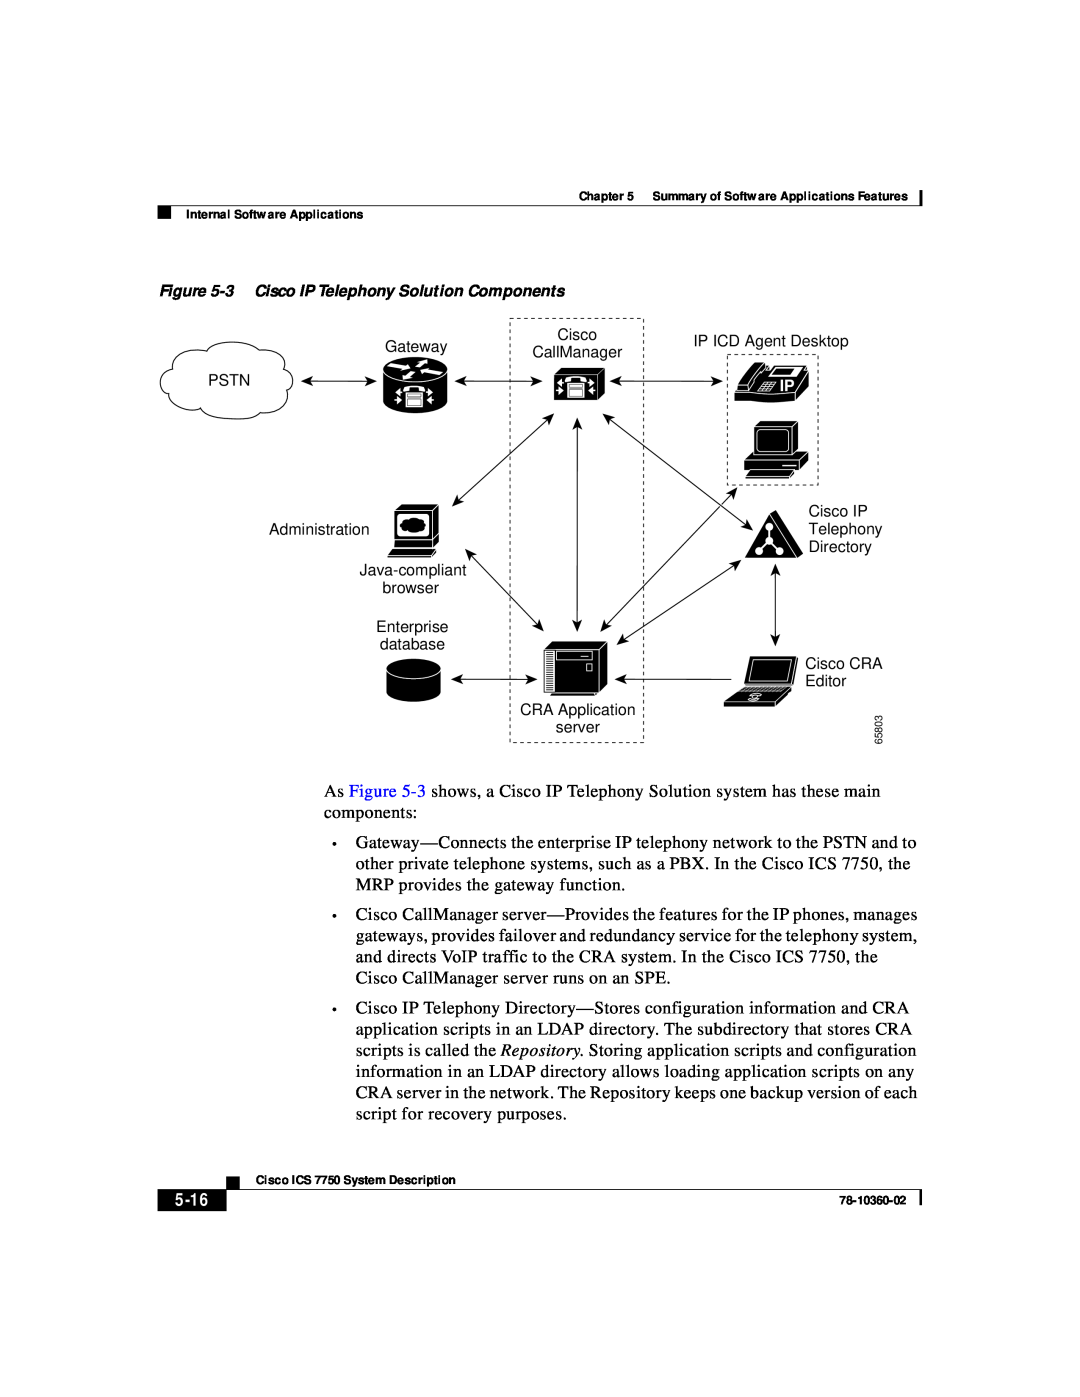 Cisco Systems ICS-7750 manual 5-16, 3 Cisco IP Telephony Solution Components 